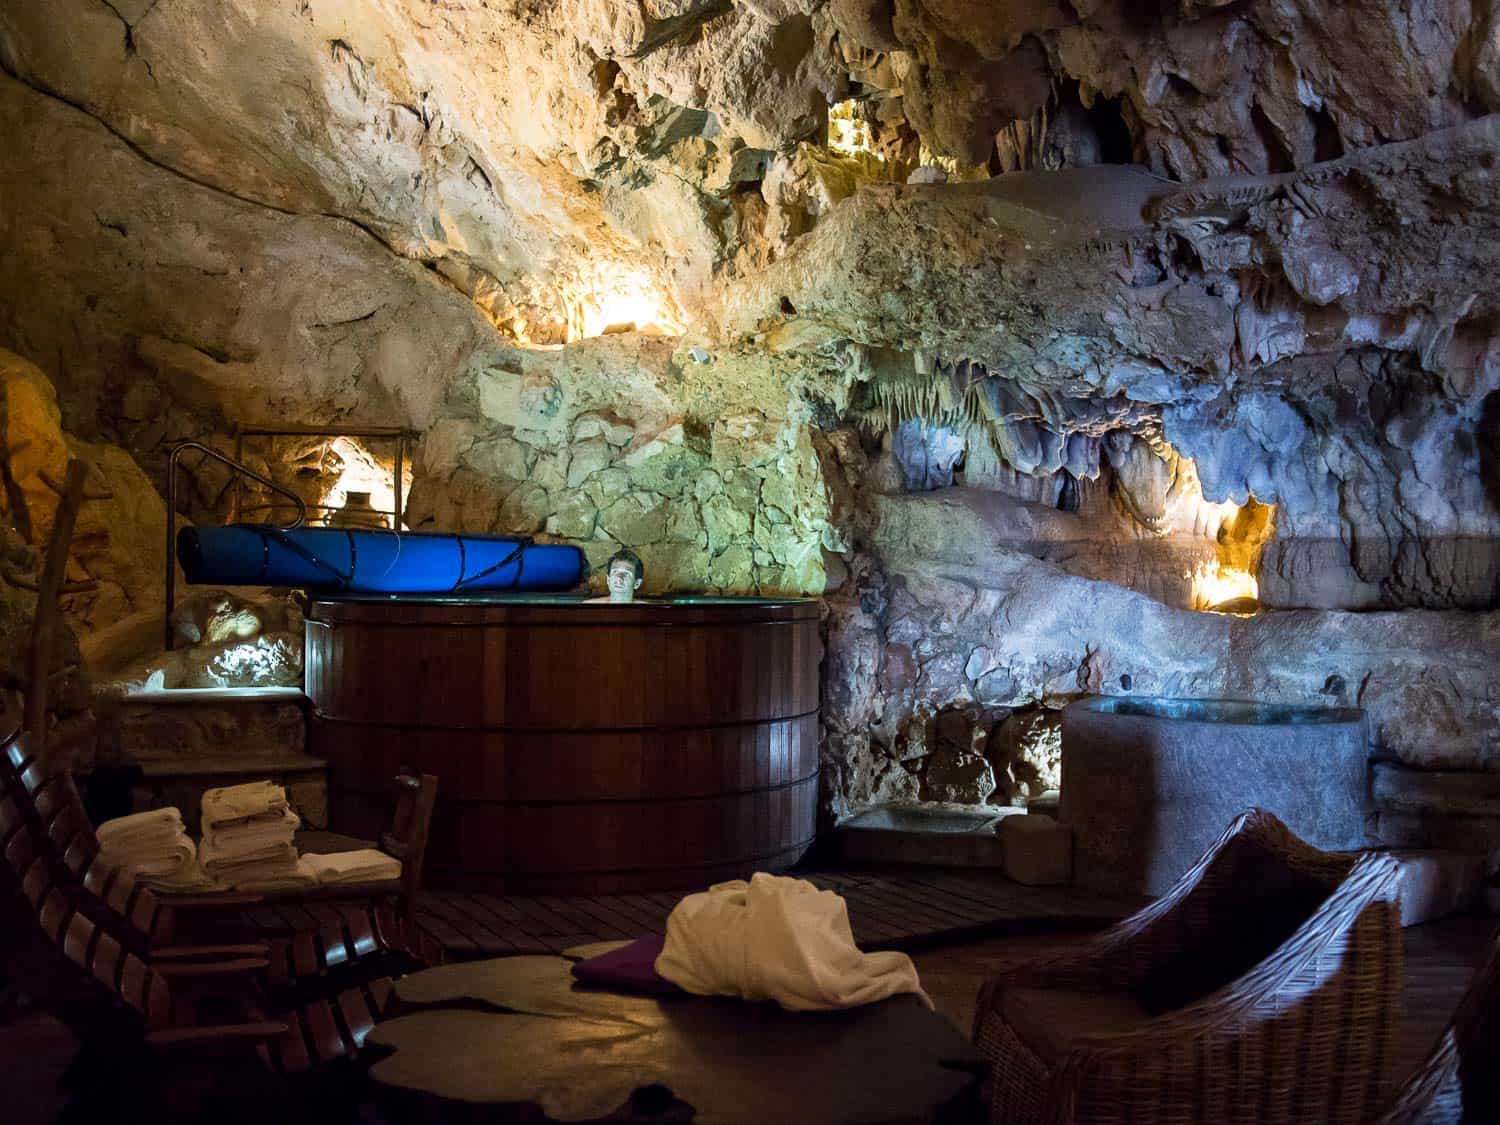 Hotel Punta Est grotto, Finale Ligure, Italy